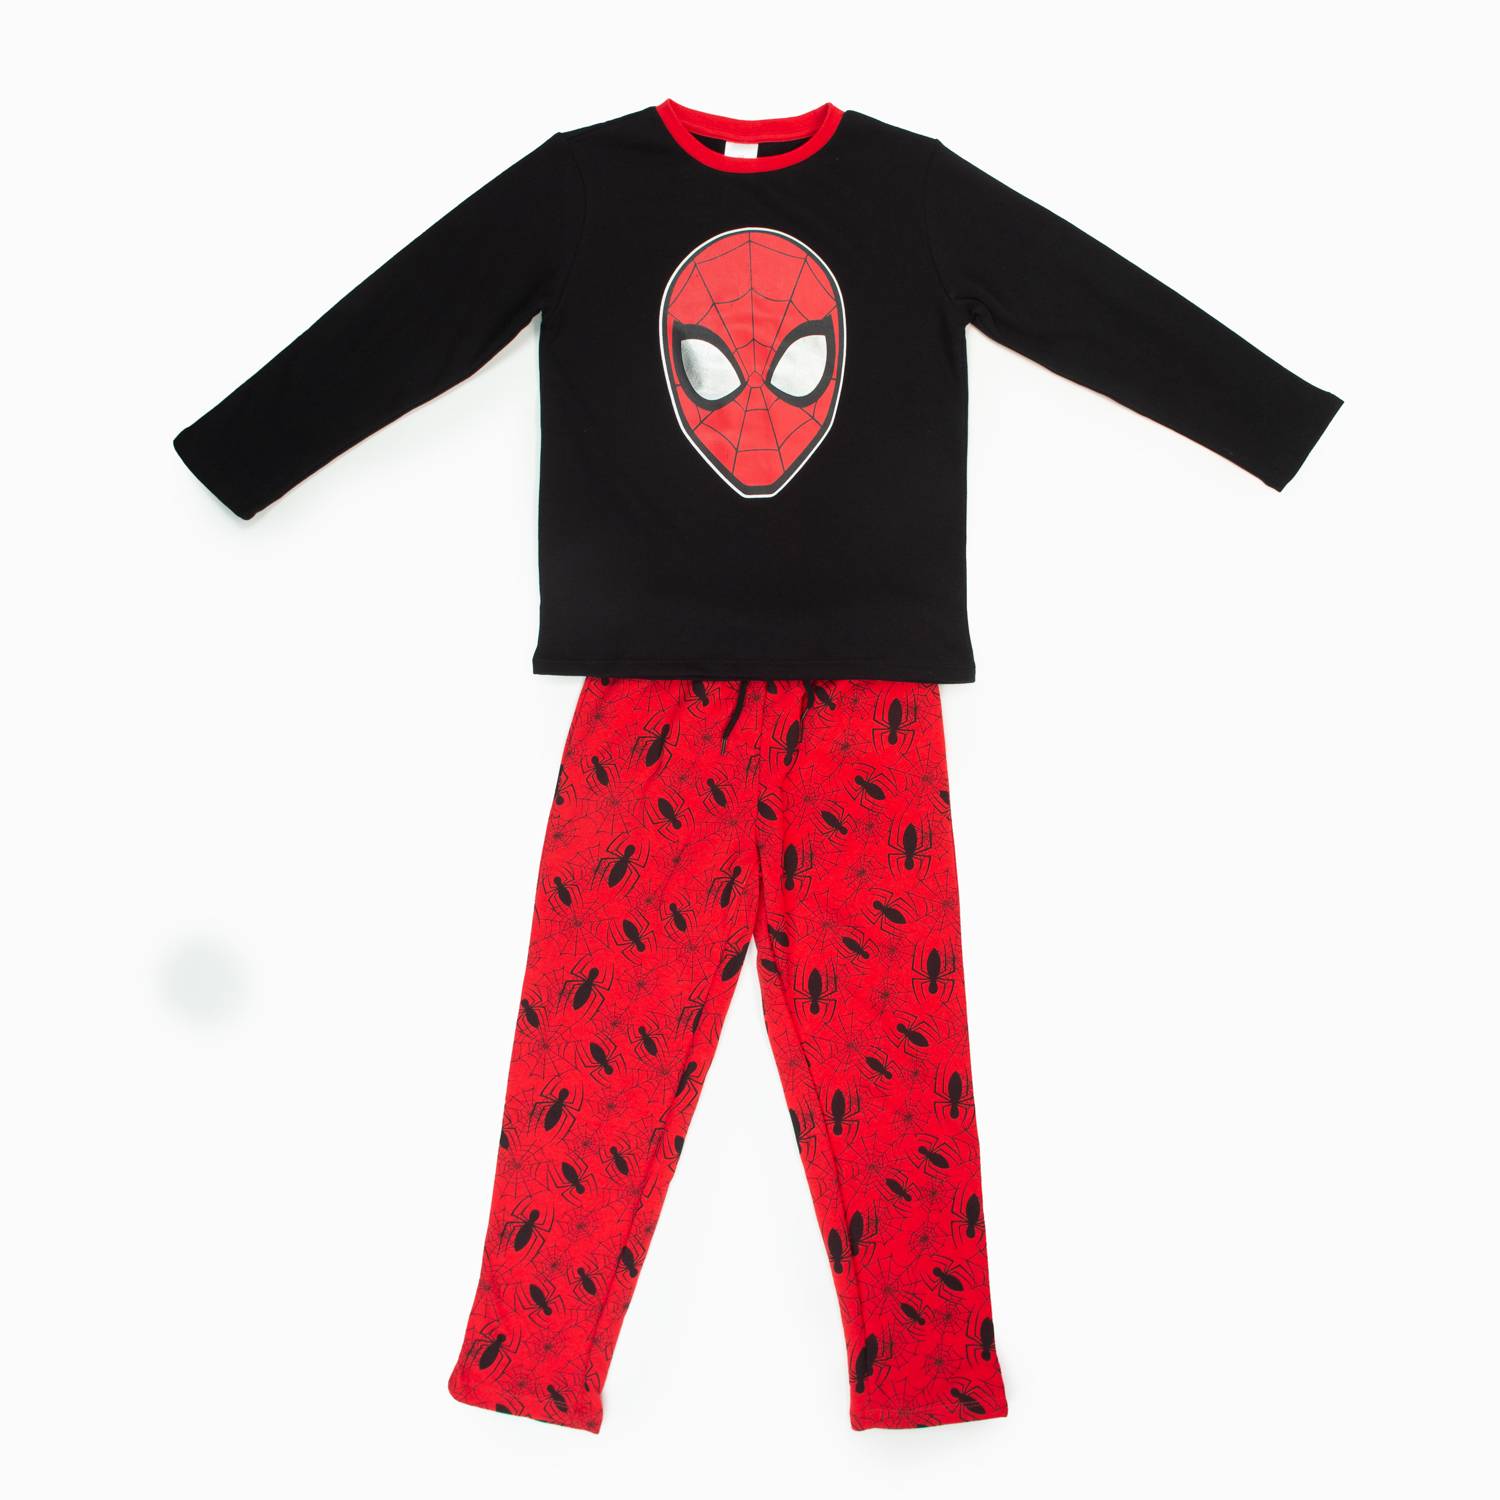 Pijama Spiderman niño o chico Verano